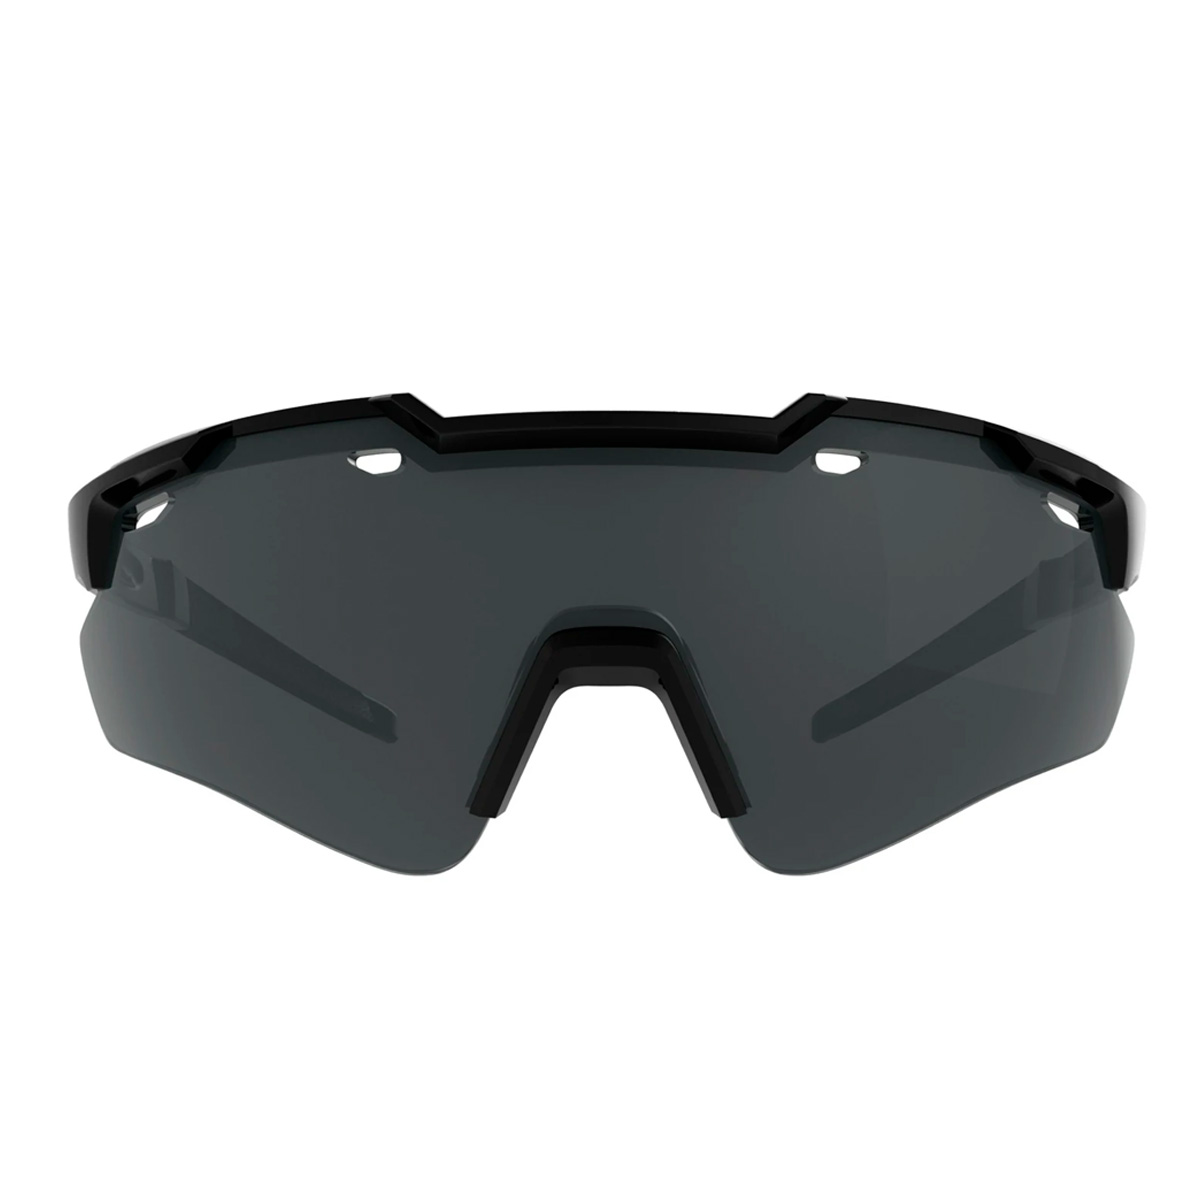 Oculos Para Ciclismo HB Shield Evo 2.0 Preto Fosco Lente Cinza Gray